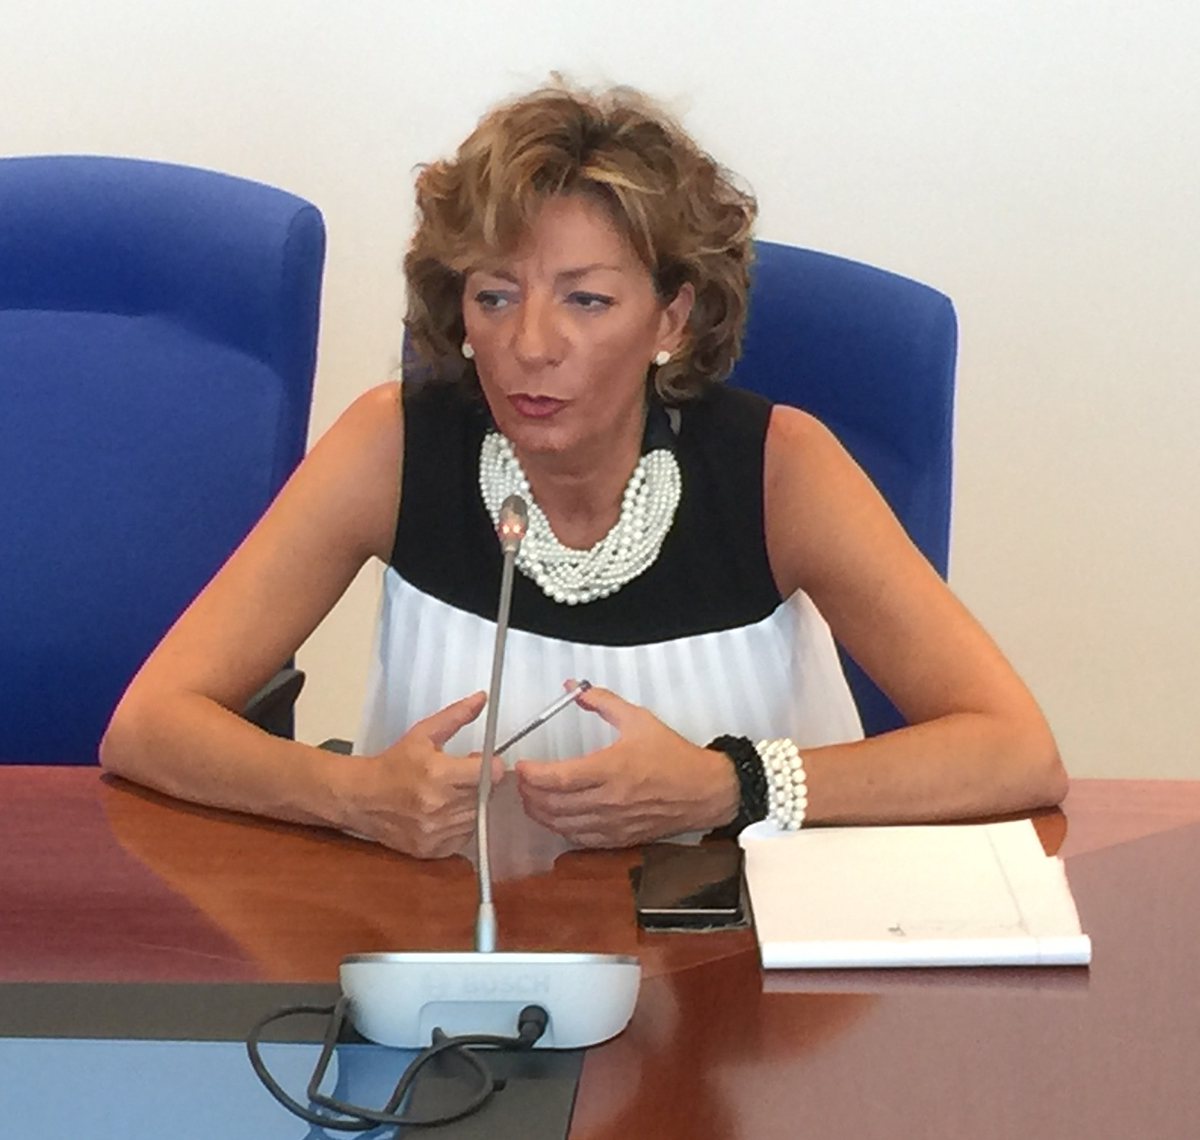 Roberta Macii, Secretary General of AdSP Civitavecchia